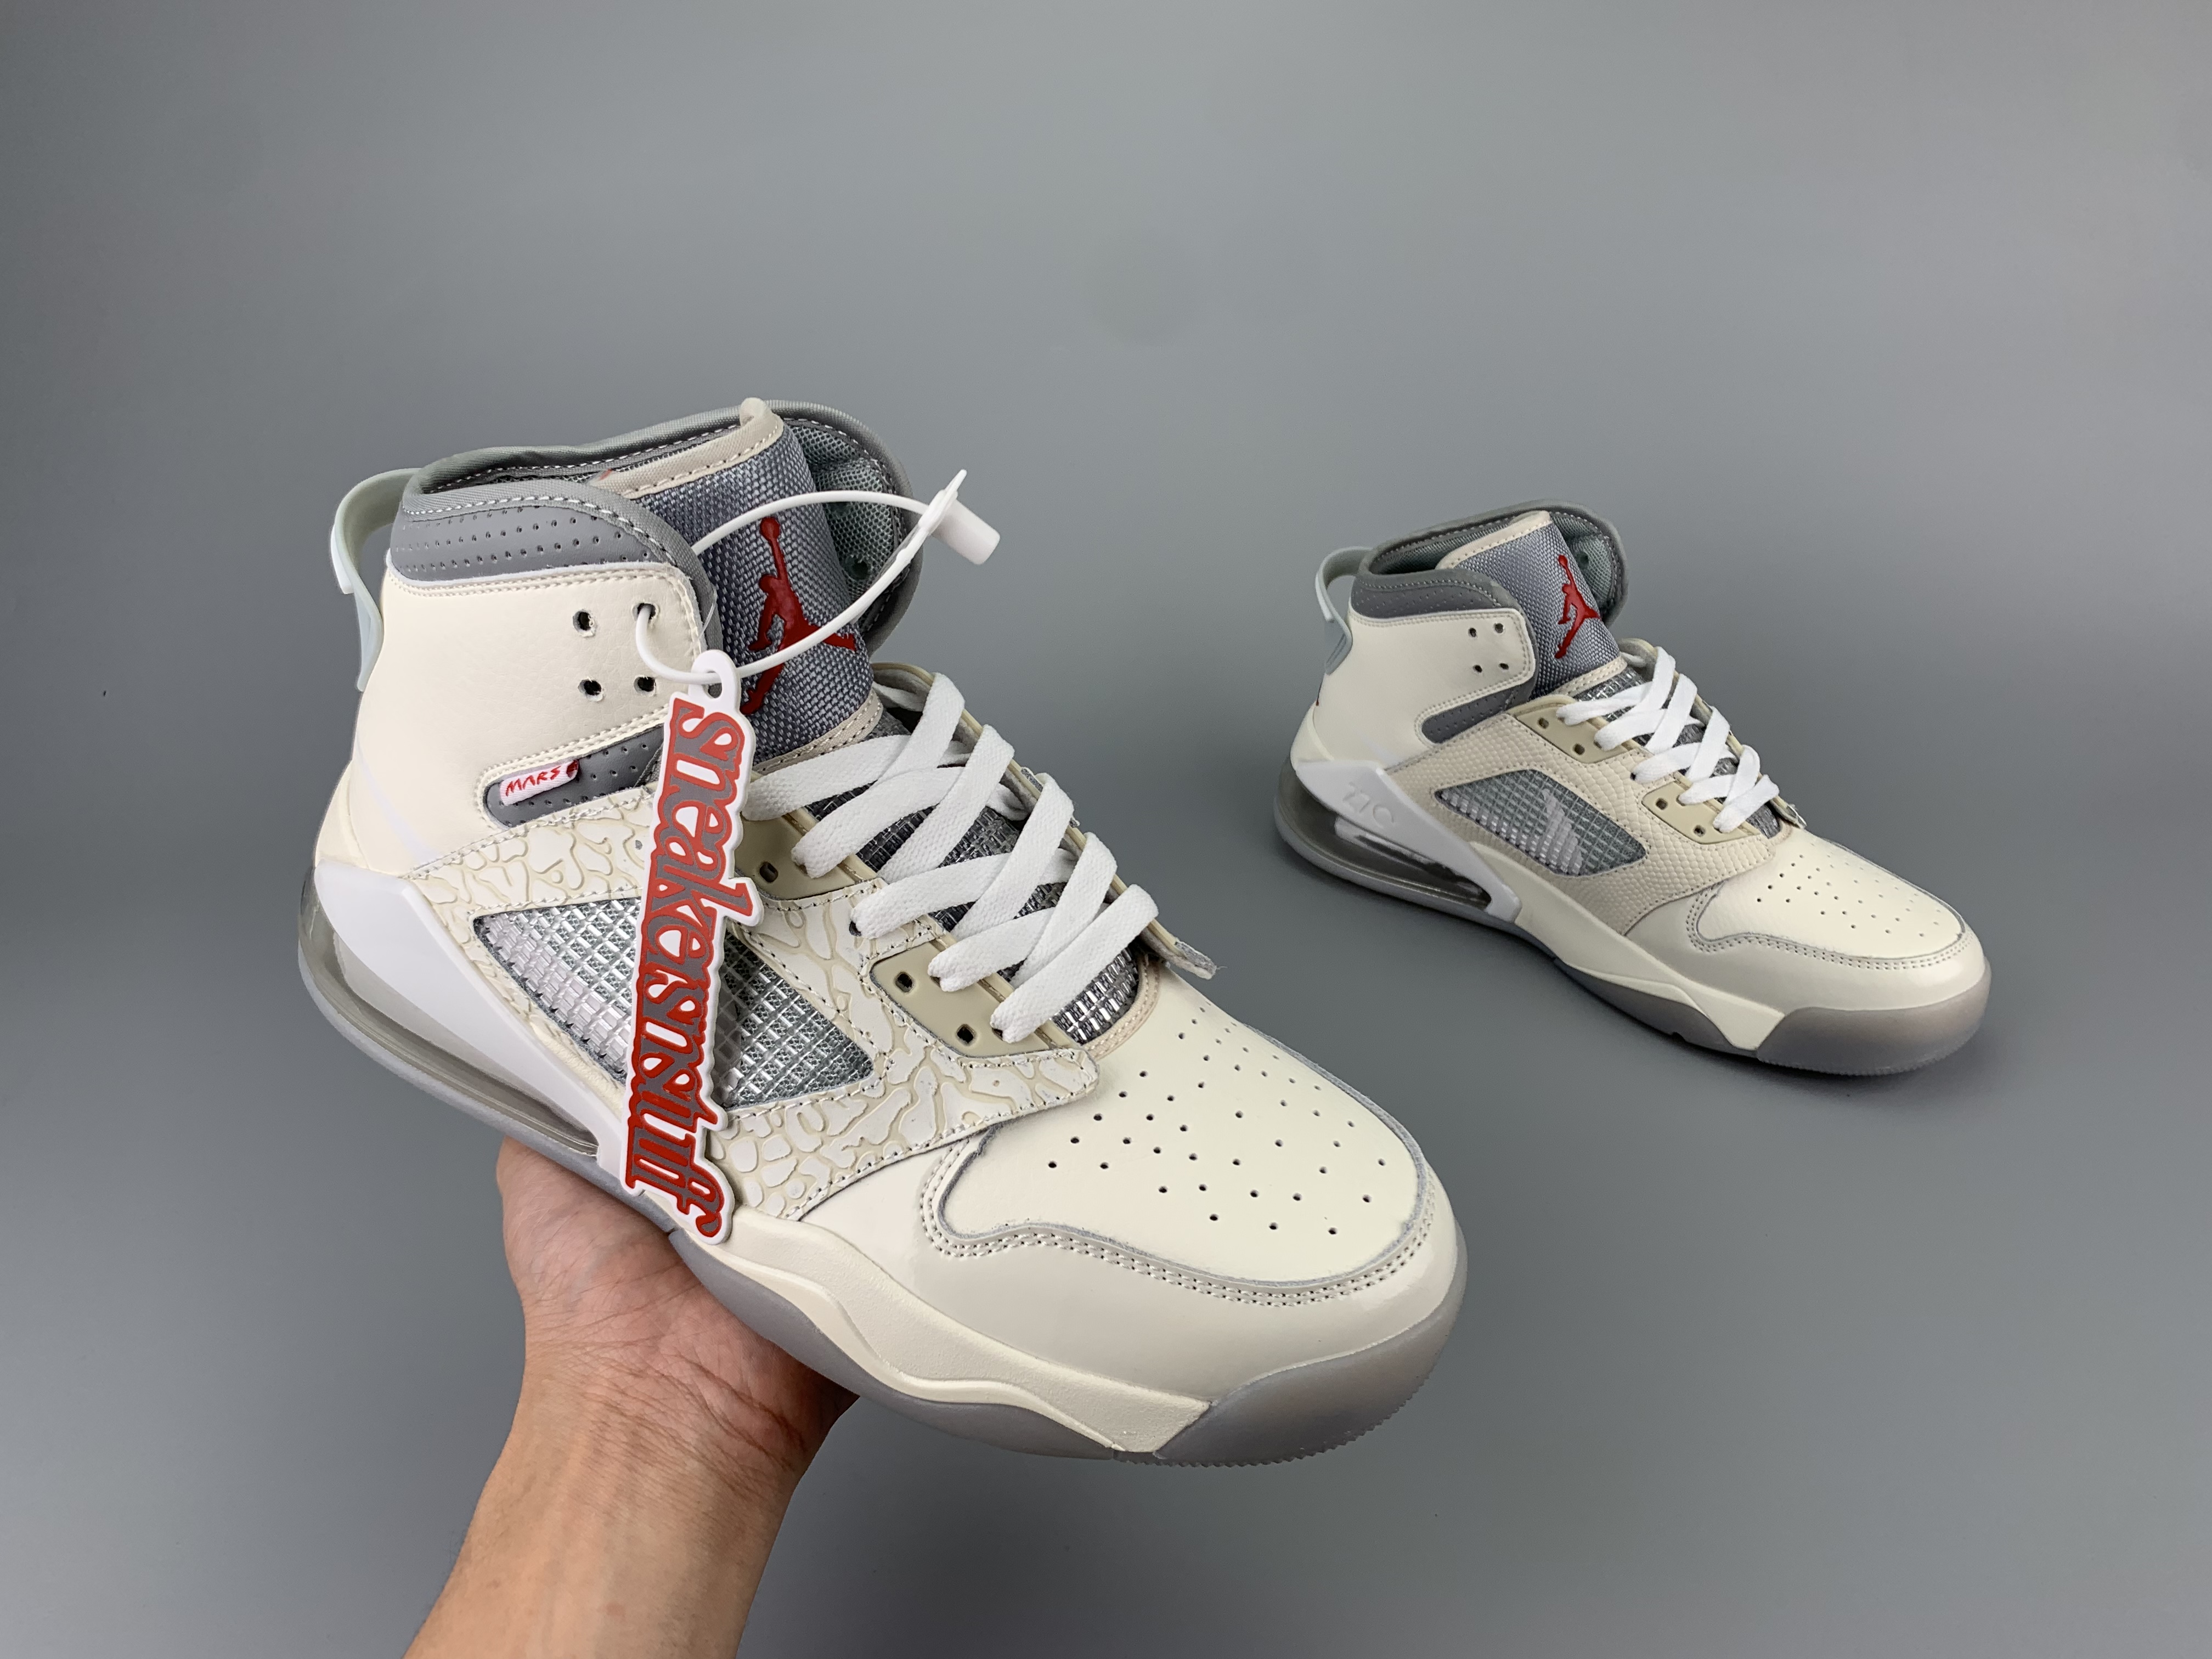 New Jordan Mars 270 White Grey